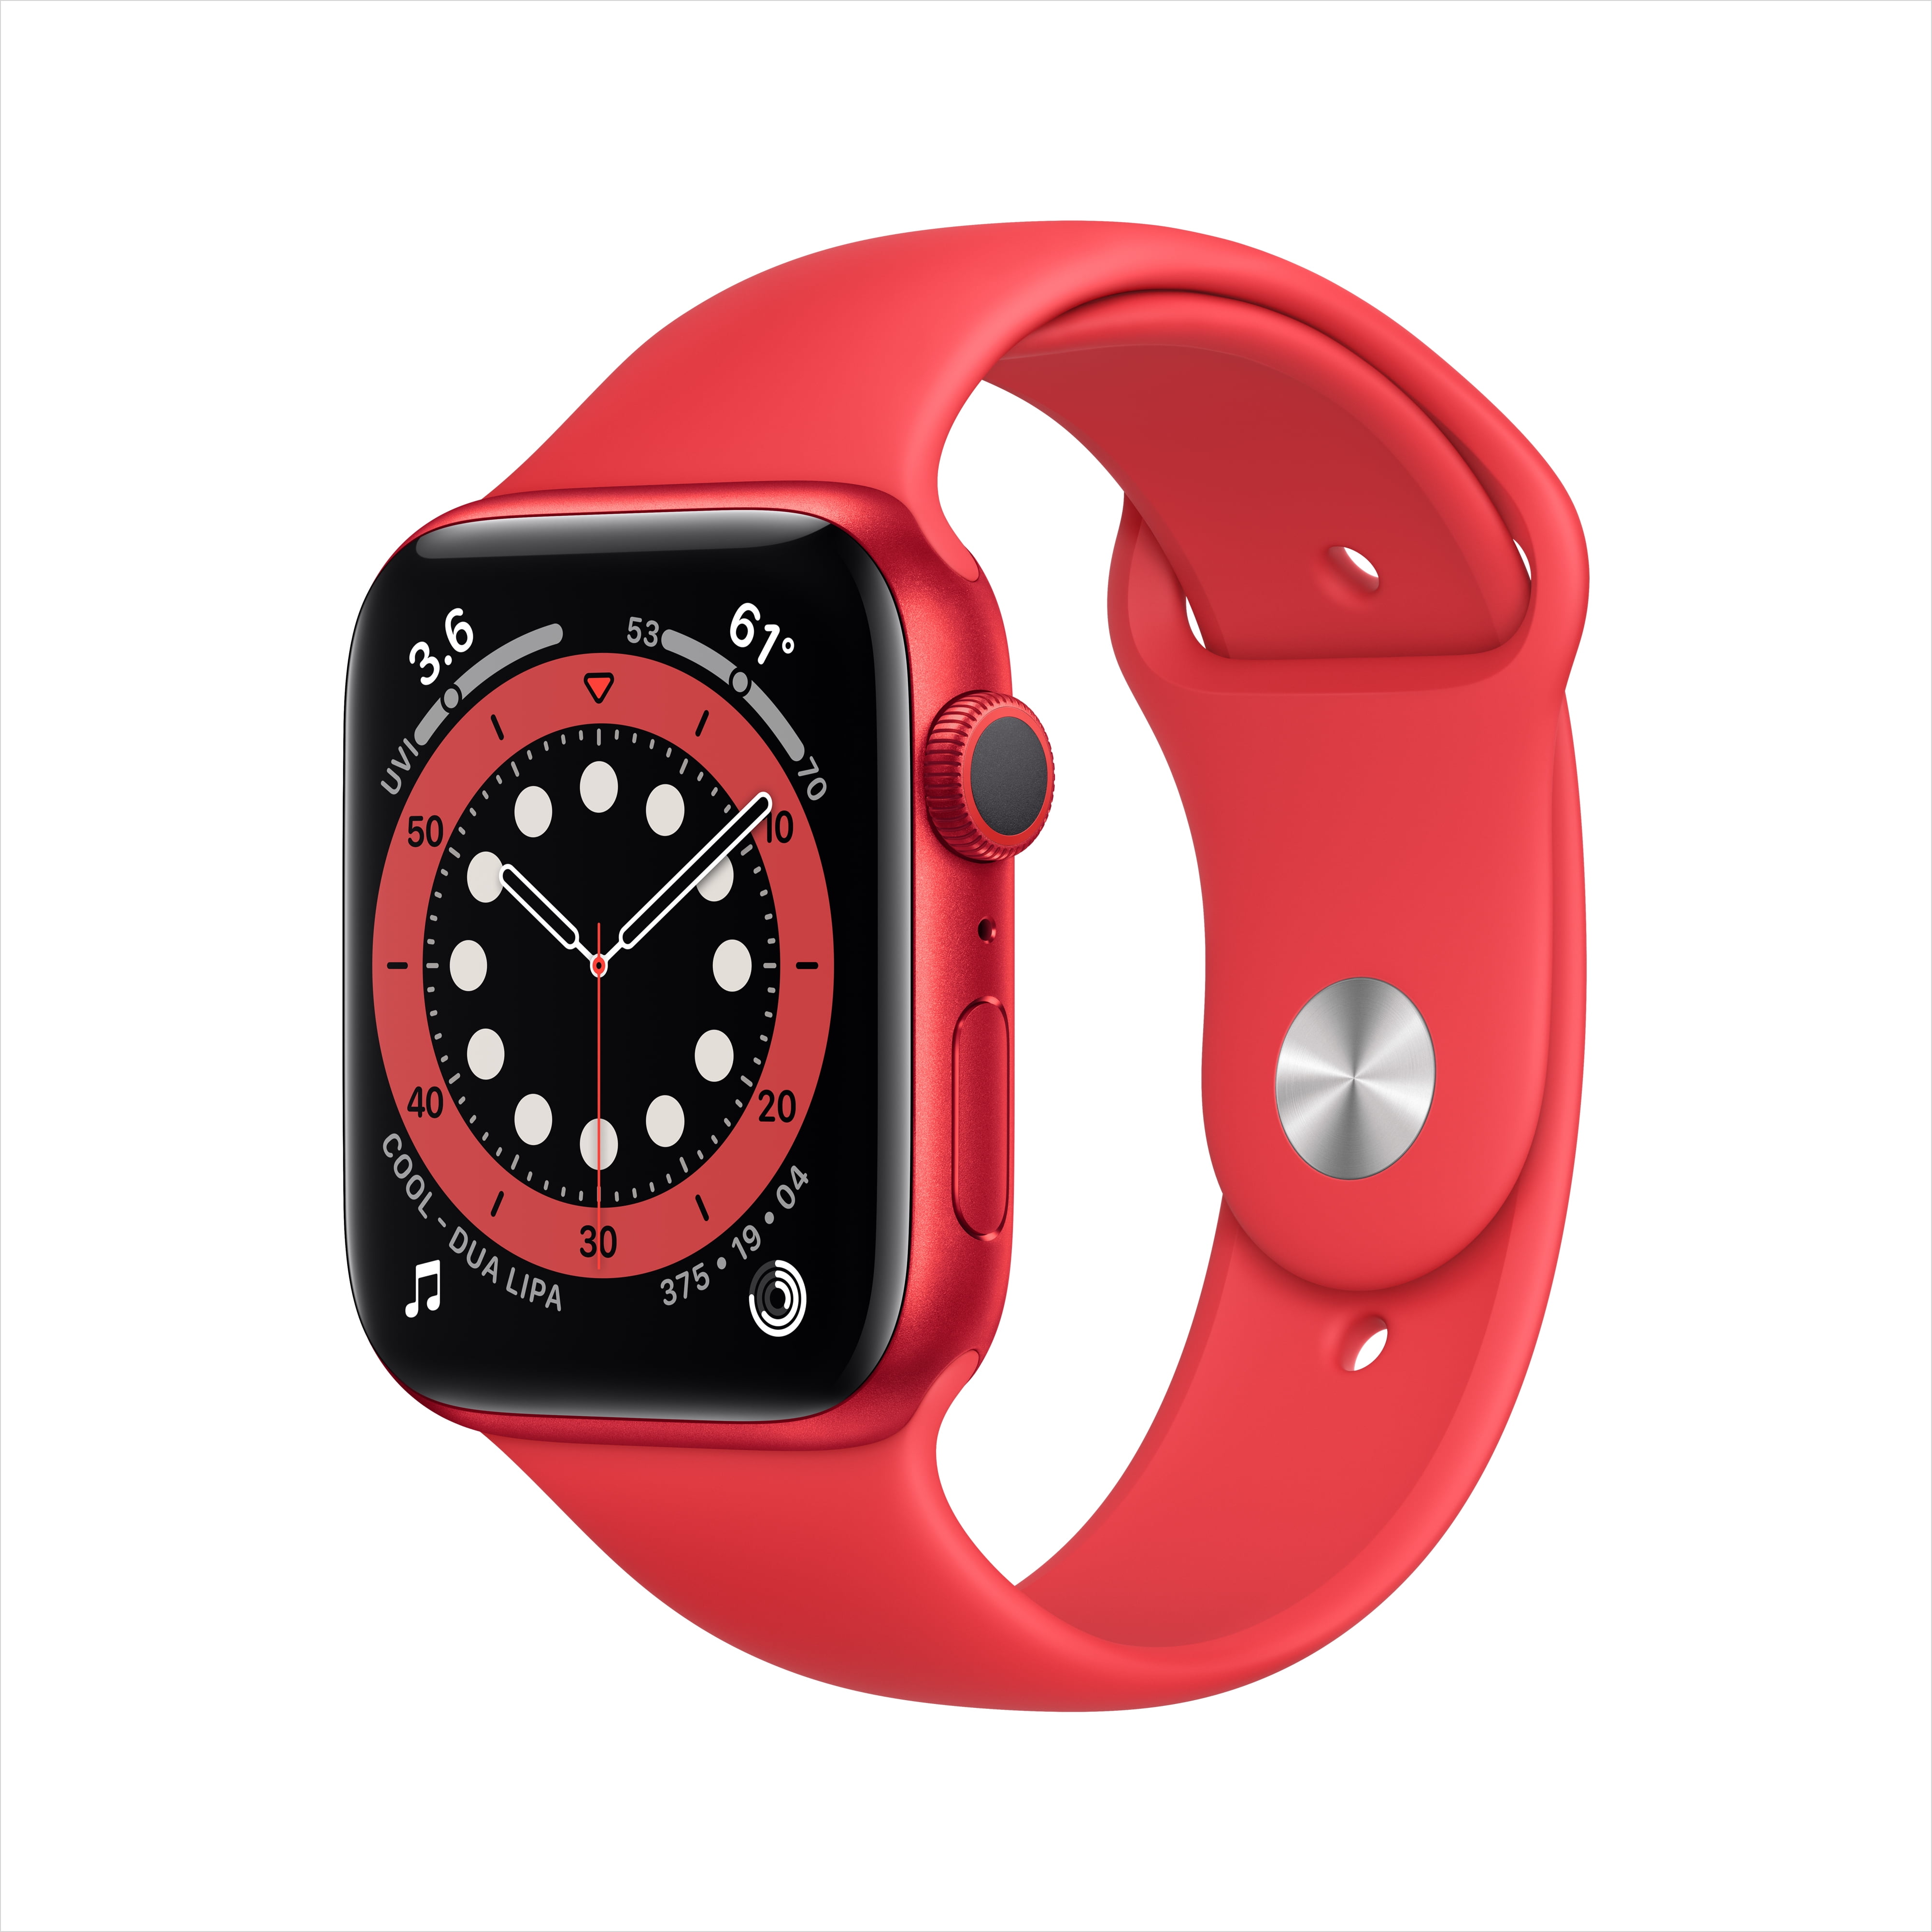 apple watch case walmart Big sale - OFF 64%